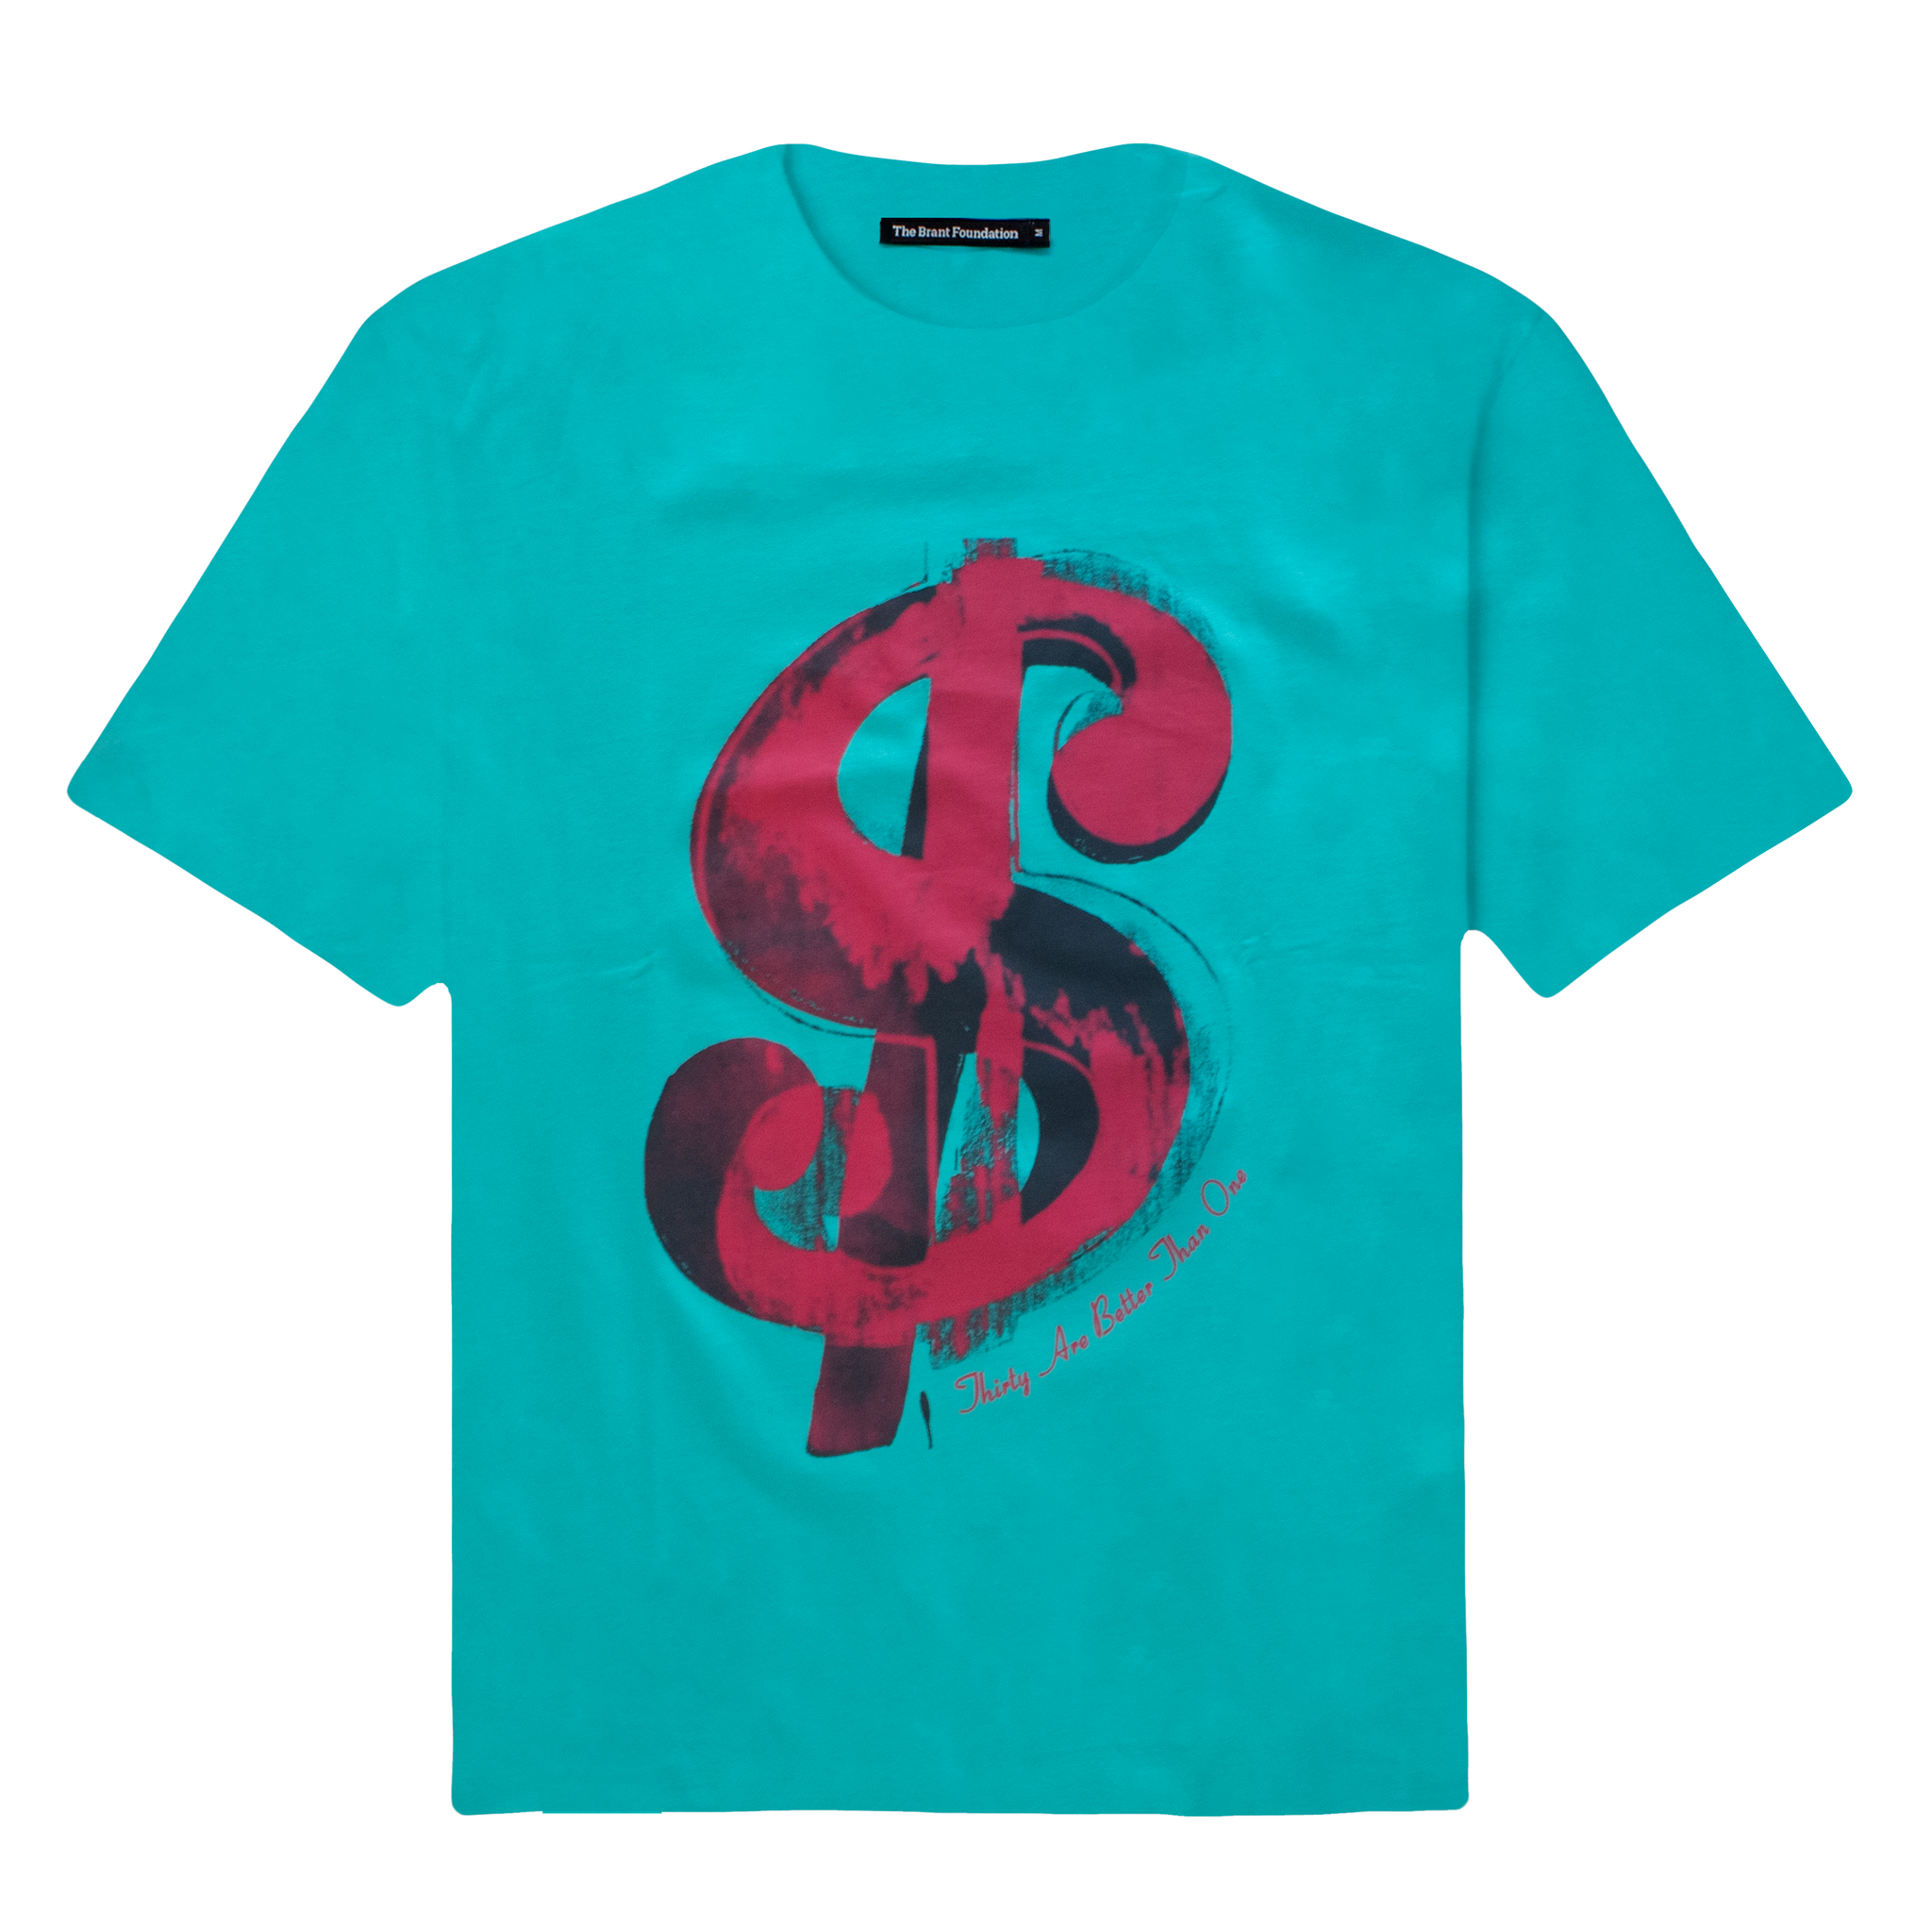 Warhol Dollar Sign Youth T-shirt